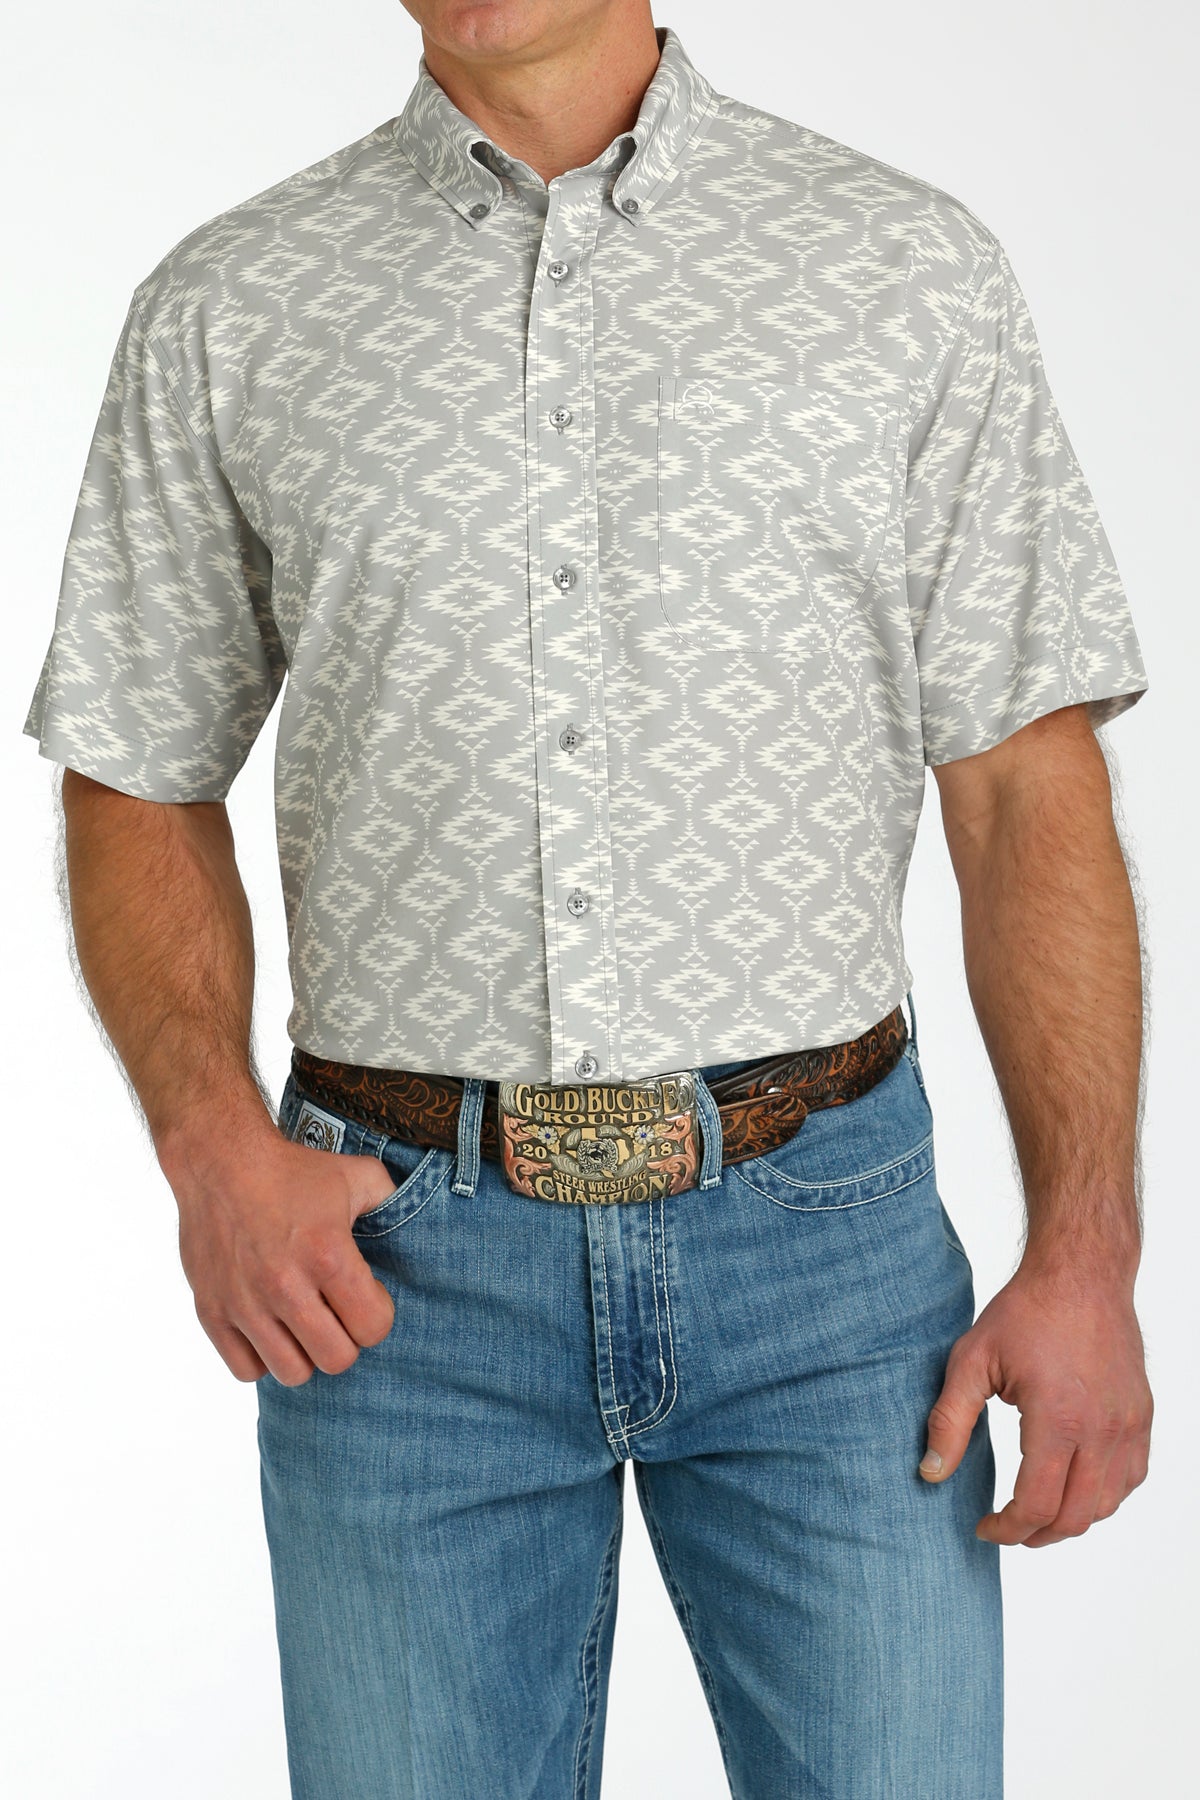 Cinch Men's S/S Arenaflex Southwest Western Button Down Shirt in Grey